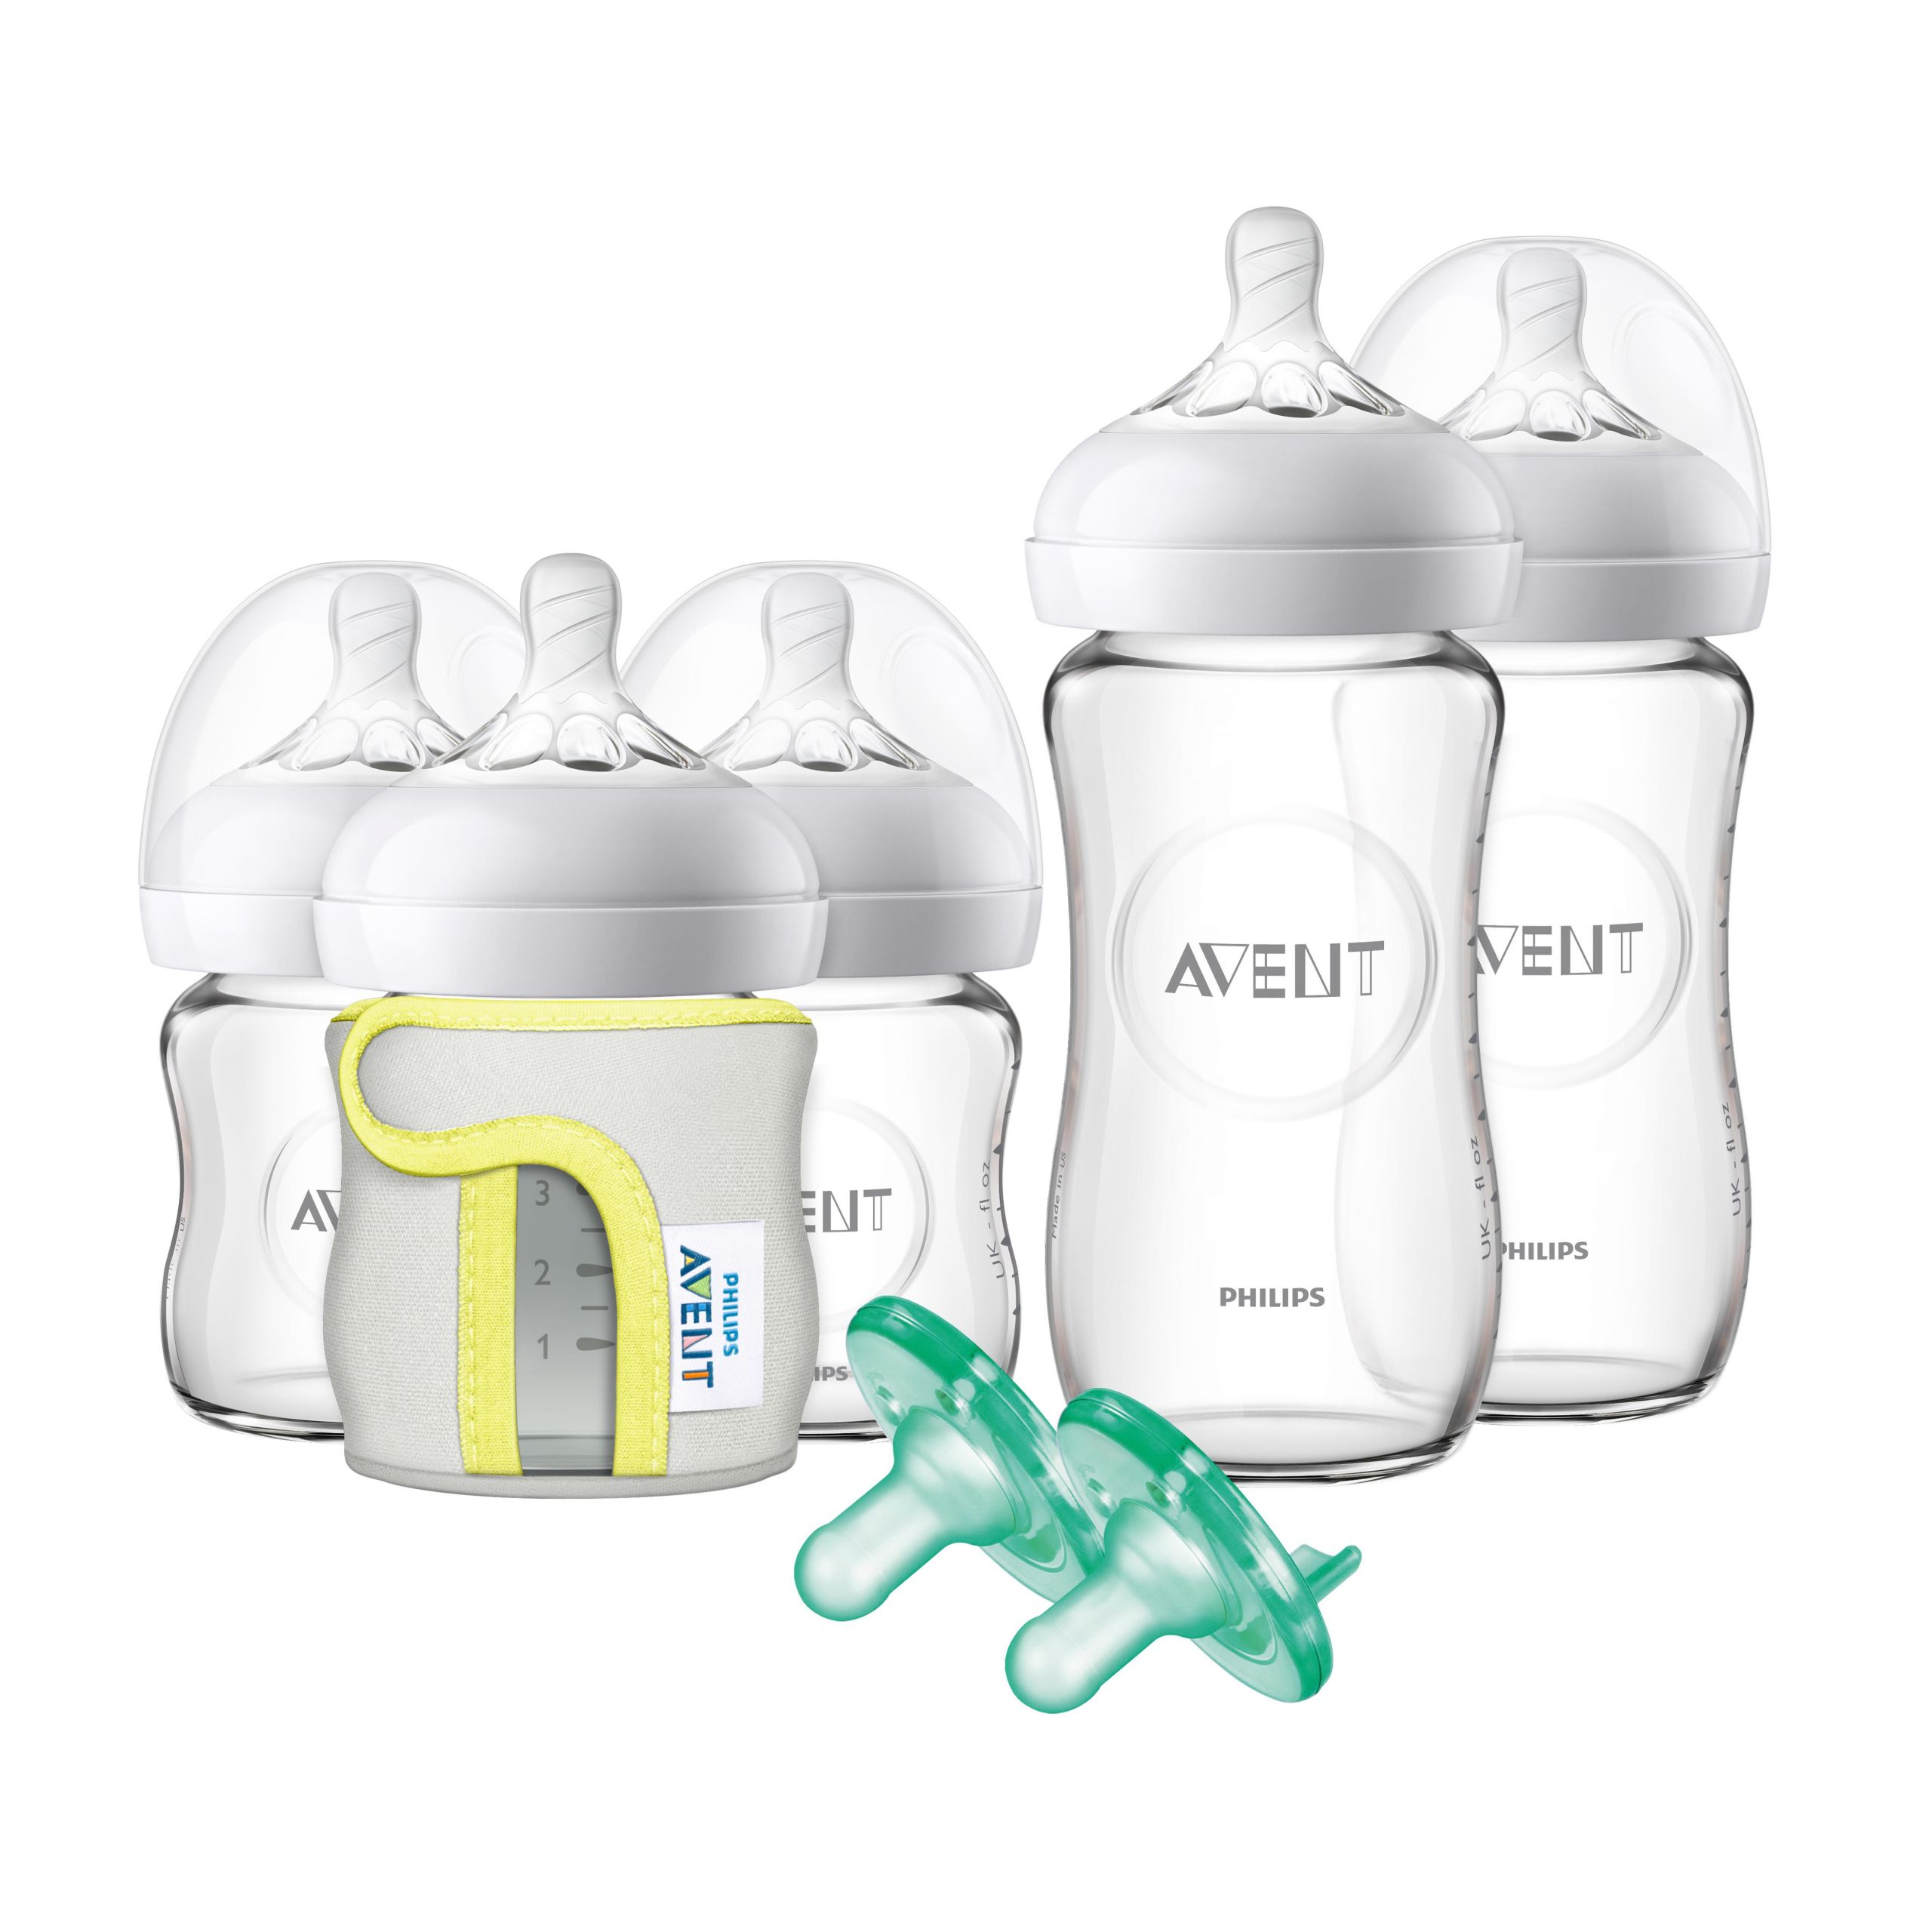 Philips Avent Natural Baby Bottle Newborn Starter Gift Set
 Amazon Philips Avent Natural Glass Bottle Baby Gift